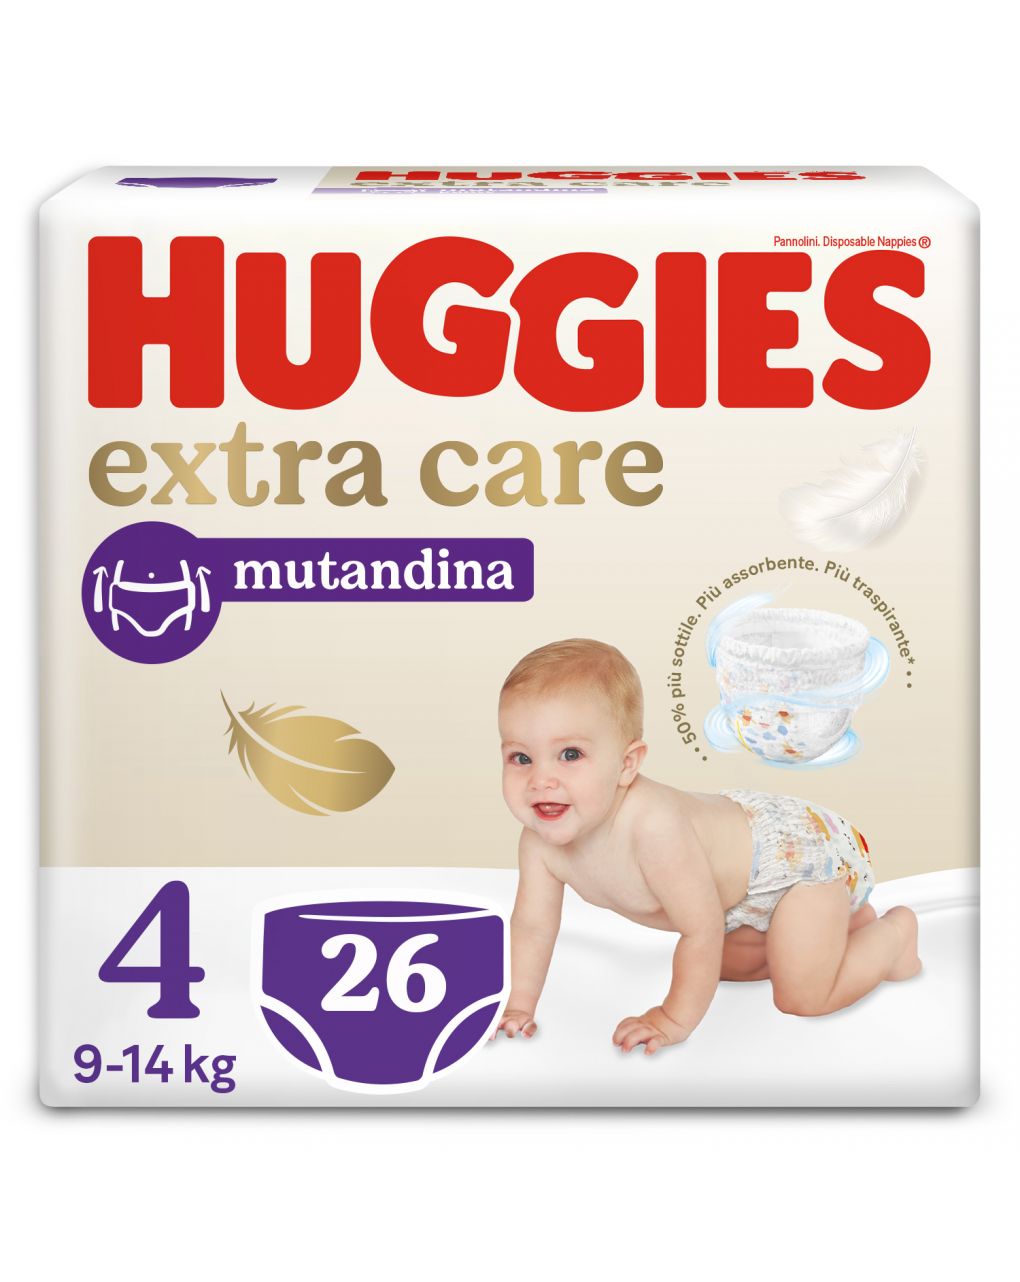 Pannolini huggies extra care mutandina tg. 4 (9-14 kg) - formato da 26 pannolini - Huggies